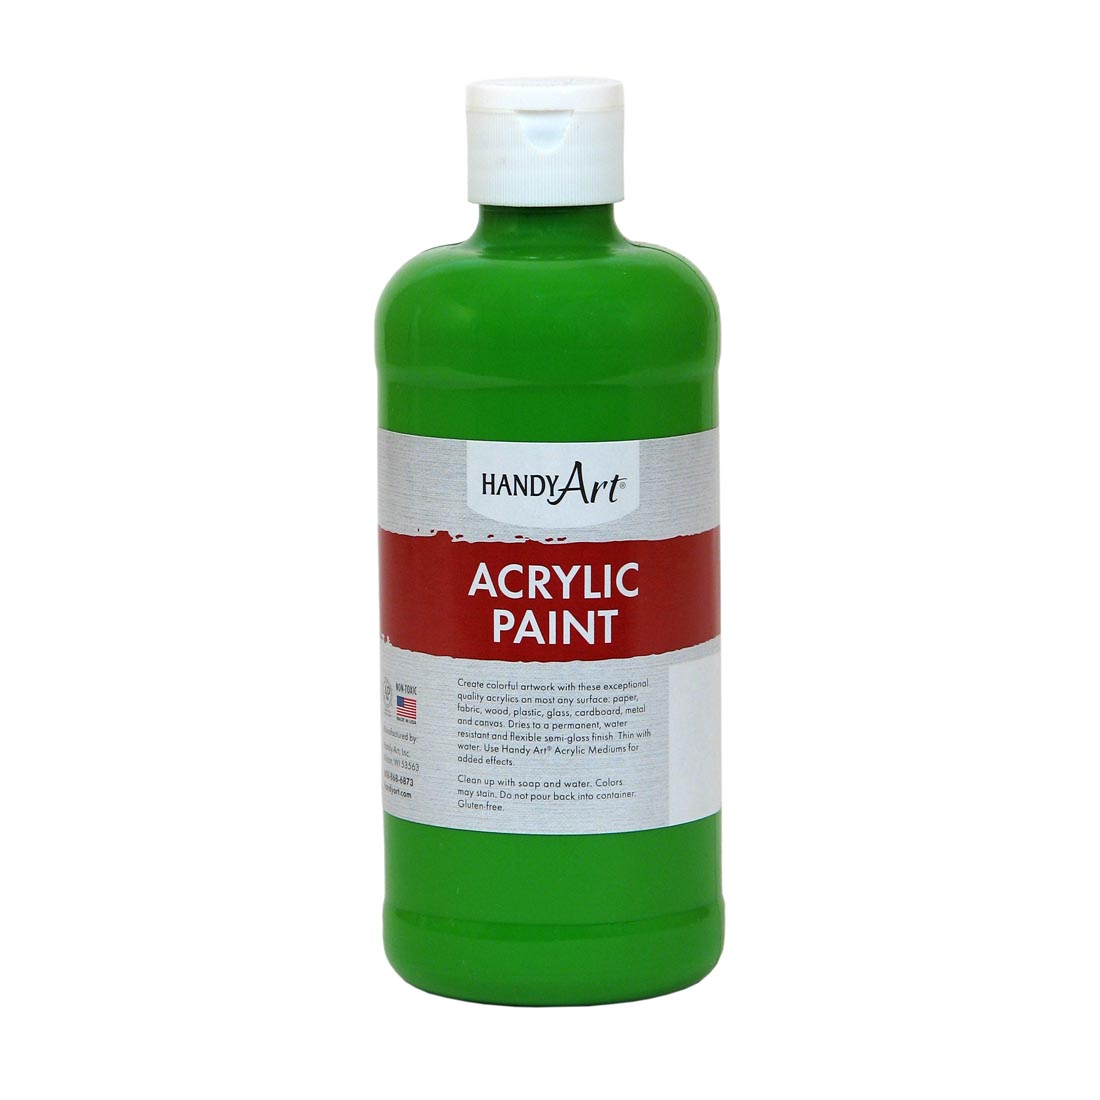 Pint Bottle of Light Green Handy Art Acrylic Paint